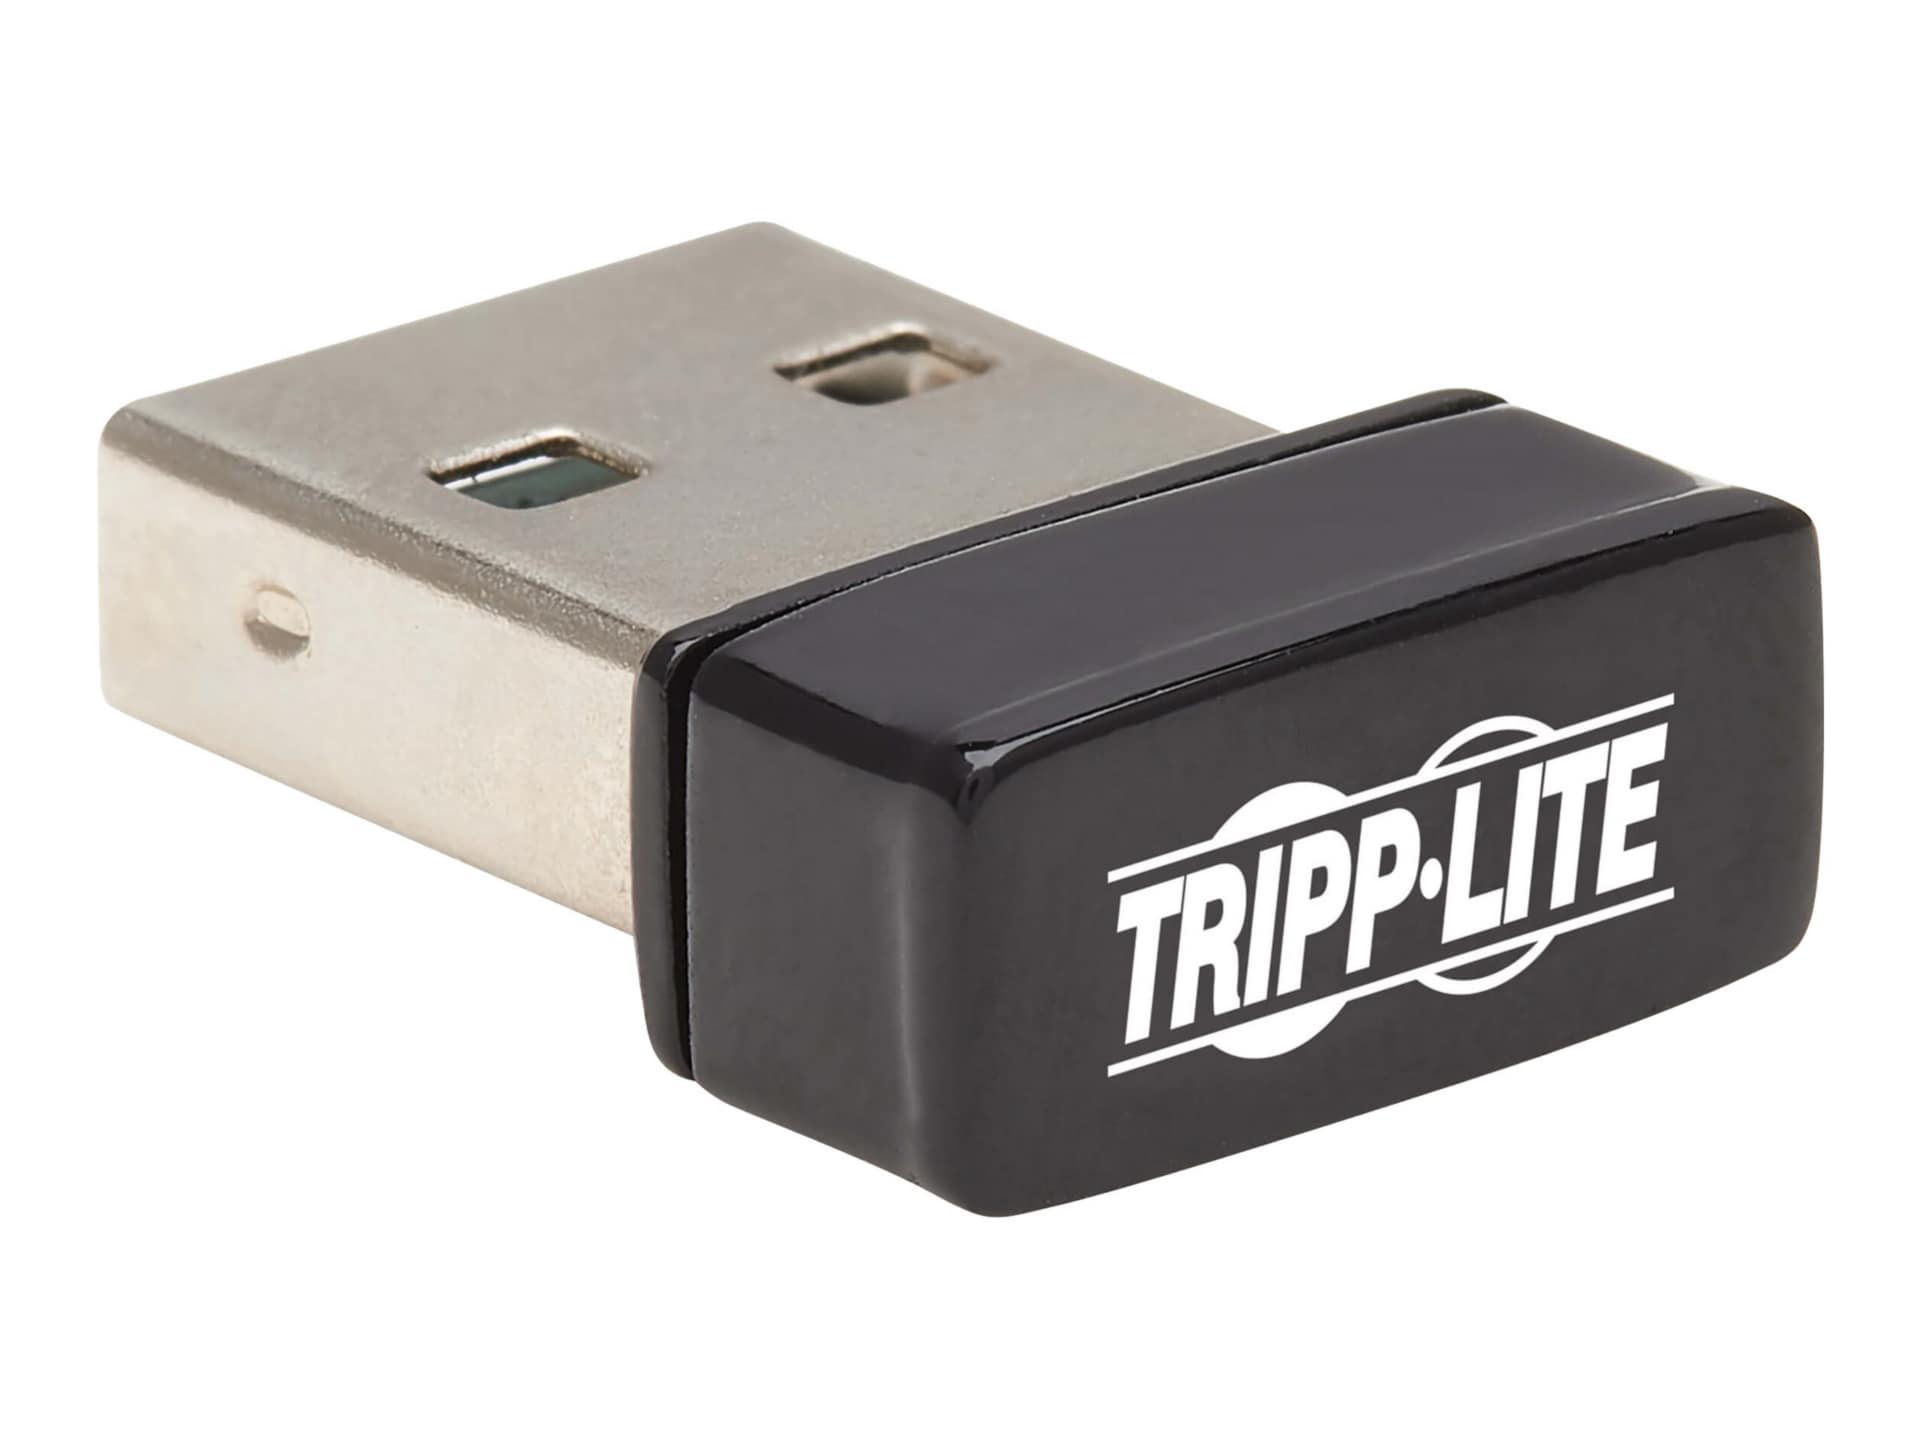 Tripp Lite USB 2.0 Wi-Fi Adapter, AC600 2.4Ghz/5Ghz Dual Band, 1T1R, 802.11ac - adaptateur réseau - USB 2.0